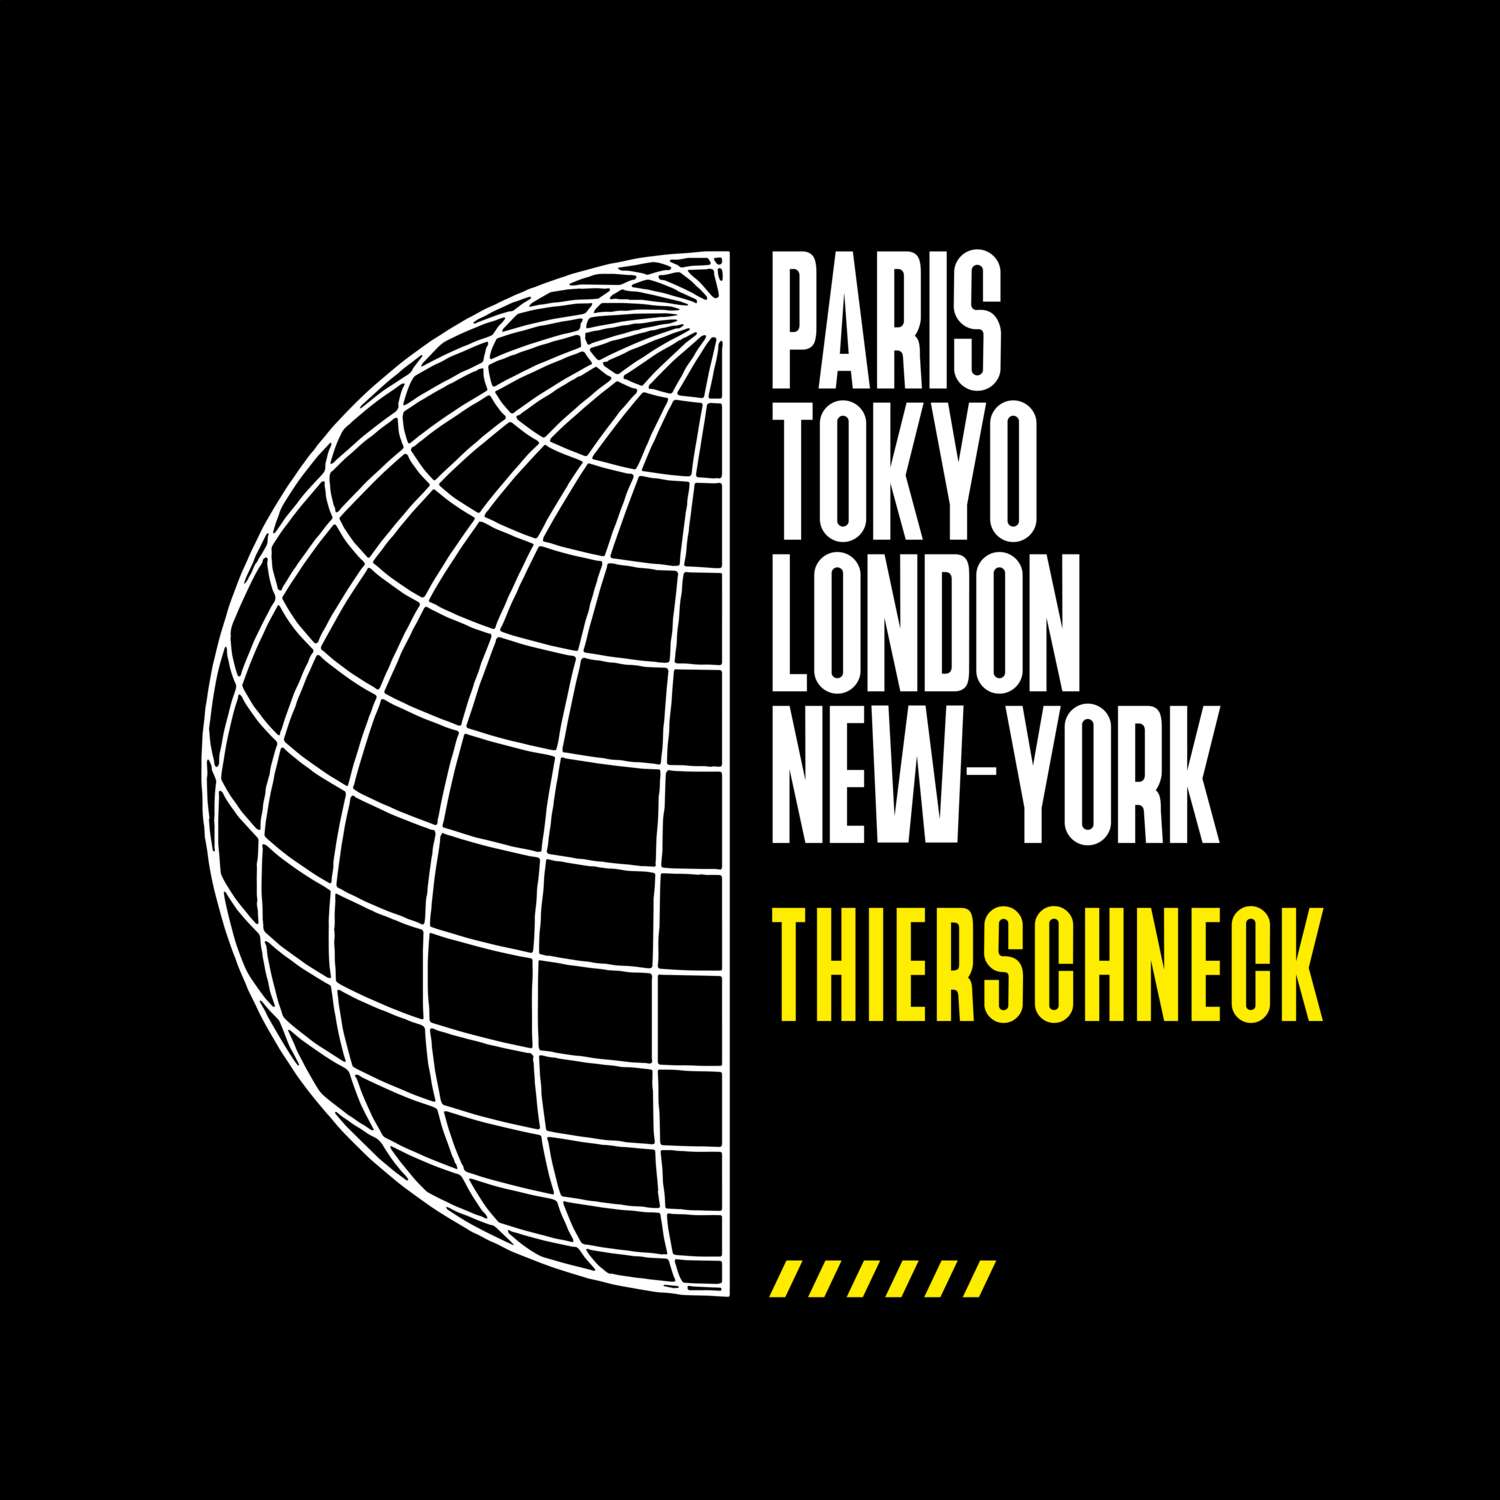 Thierschneck T-Shirt »Paris Tokyo London«